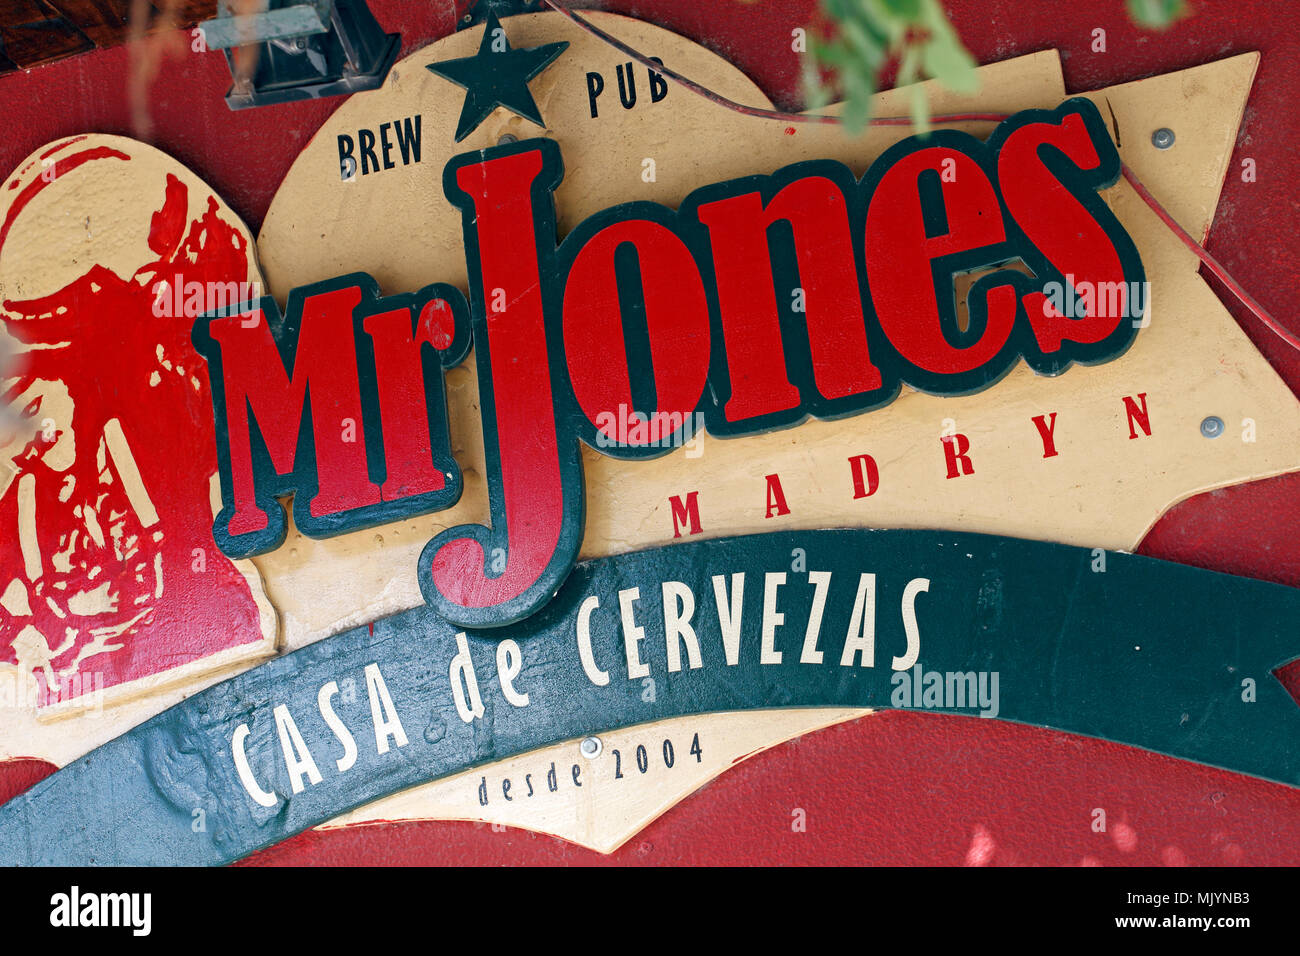 Mr Jones House of Beers, Puerto Madryn, Argentina. Stock Photo